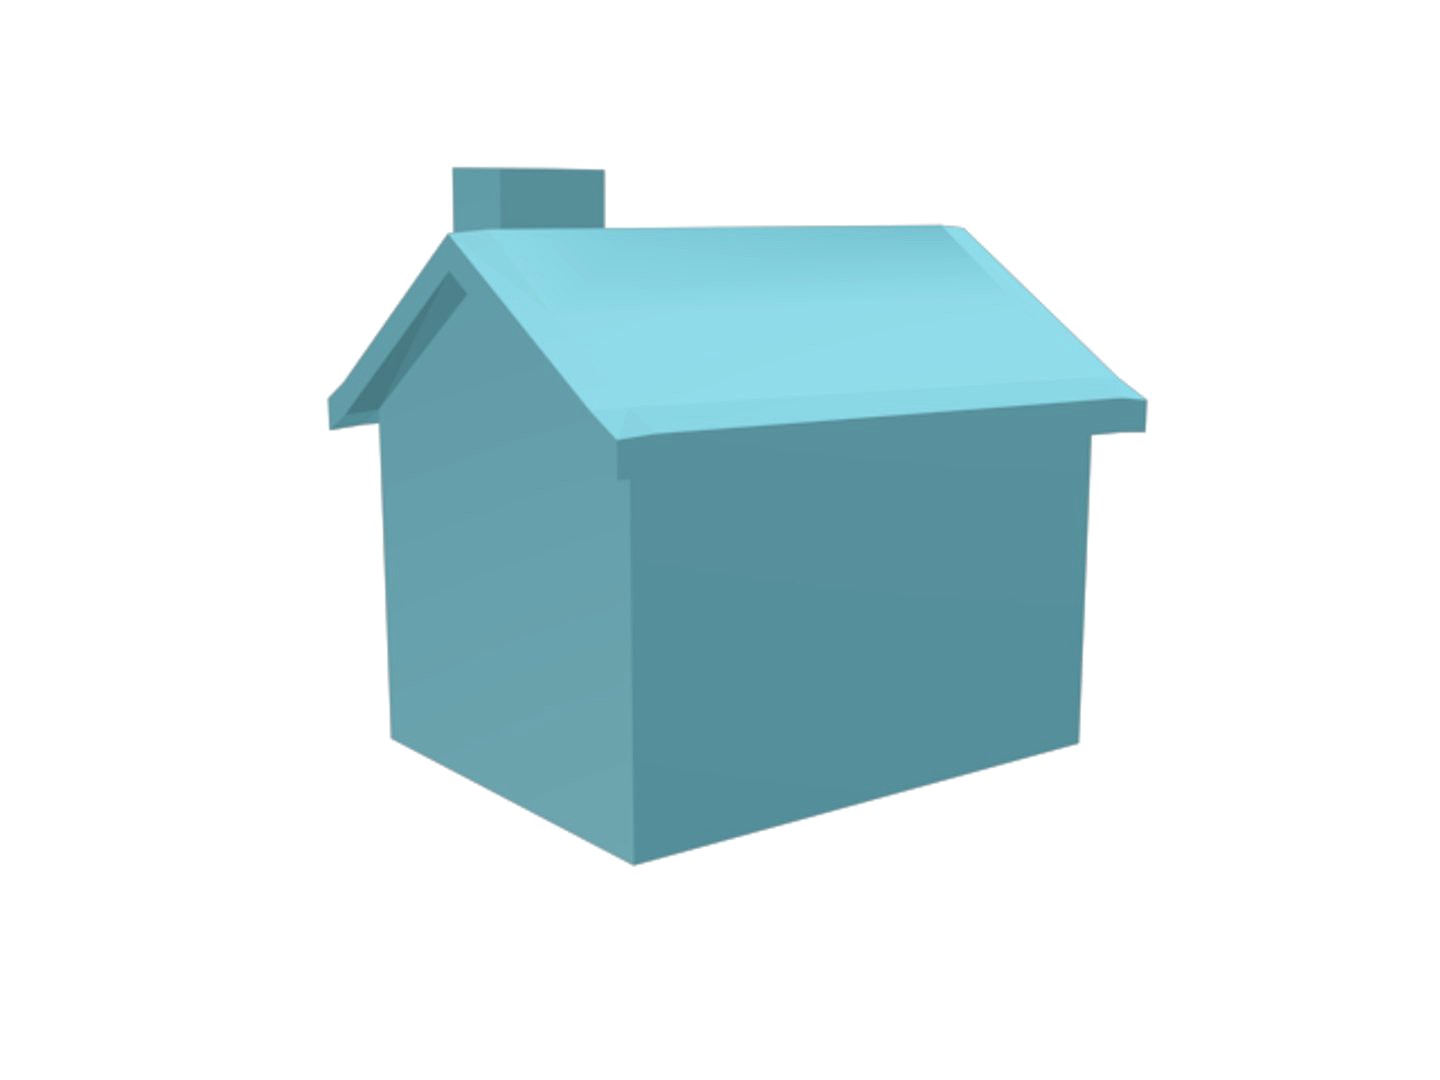 Simple House